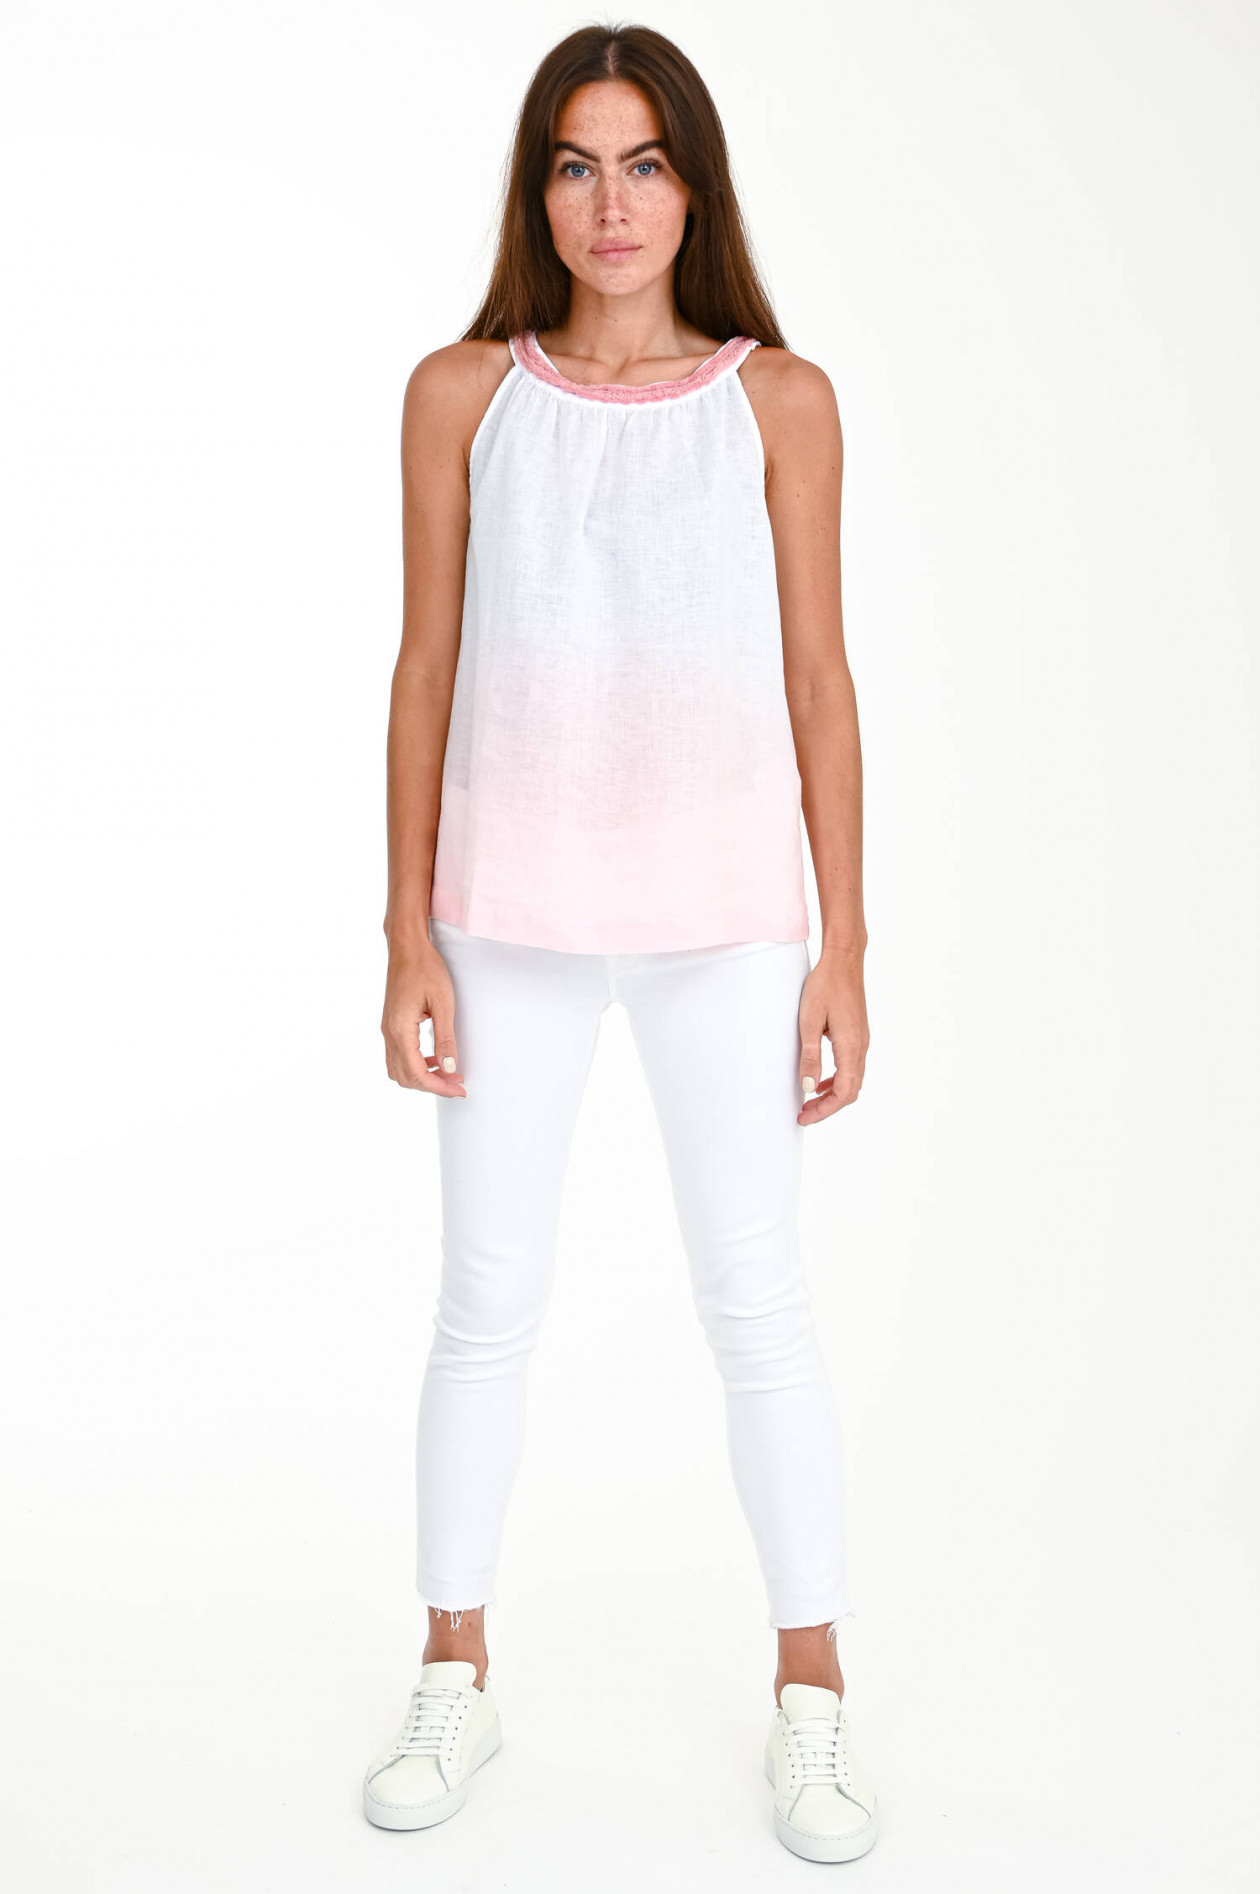 Damen T-shirt ☆ Bluse Pastell Farben mint rosa oversize Blogger Italy Top #43